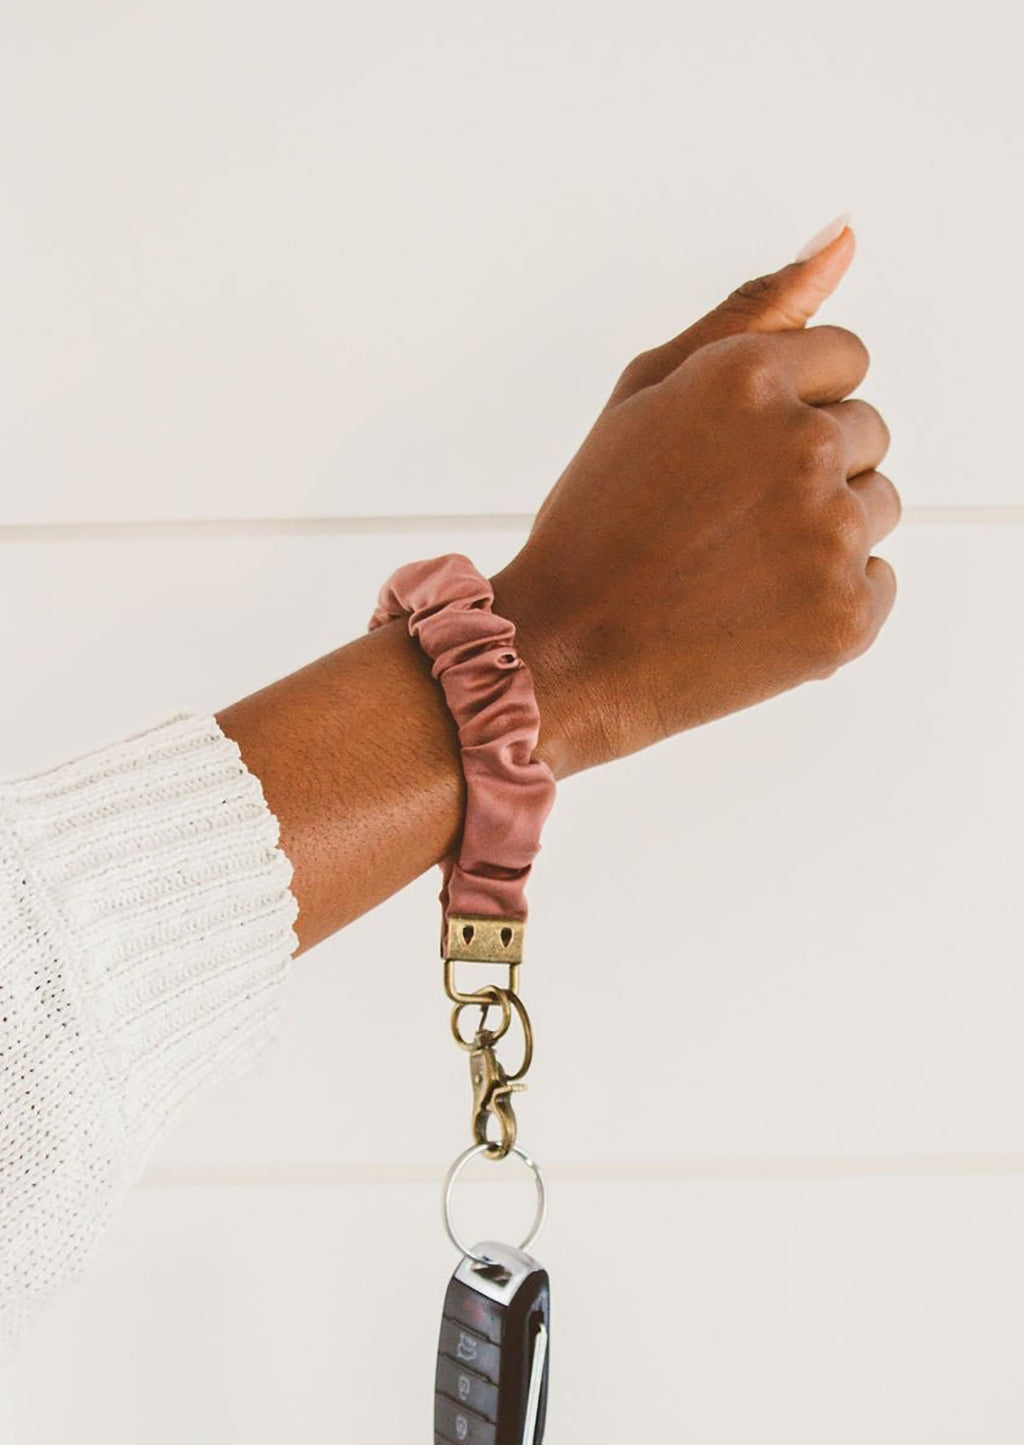 Dusty Rose: A dusty rose scrunchie wristlet keychain around a woman's wrist.